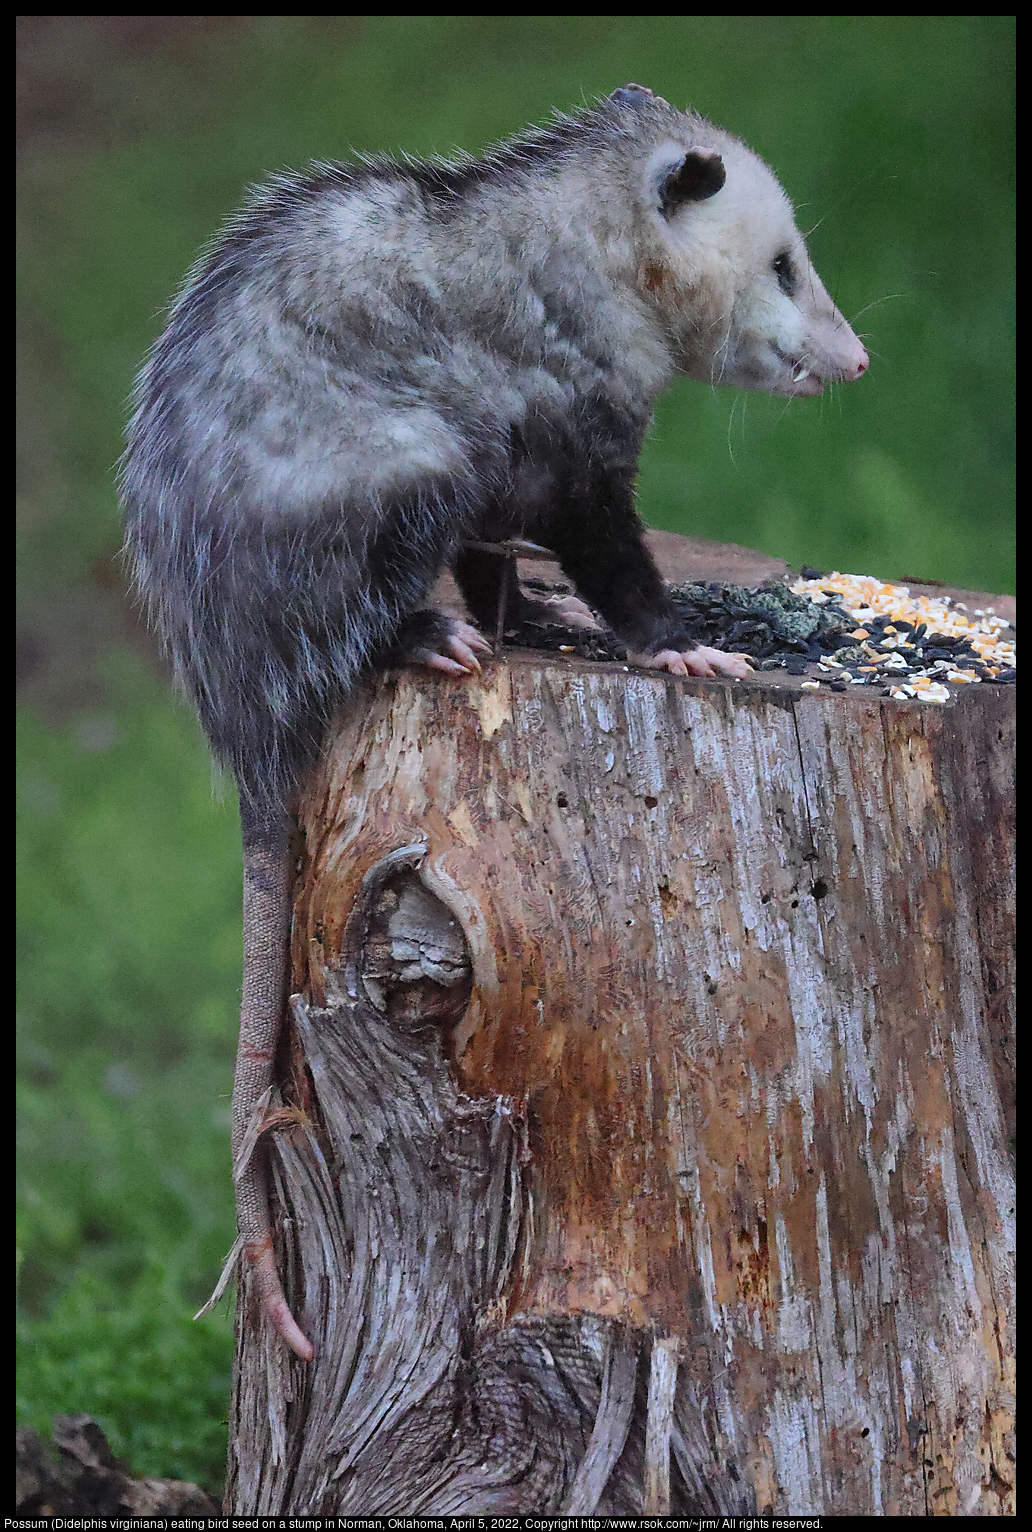 Possum (Didelphis virginiana) eating bird seed on a stump in Norman, Oklahoma, April 5, 2022